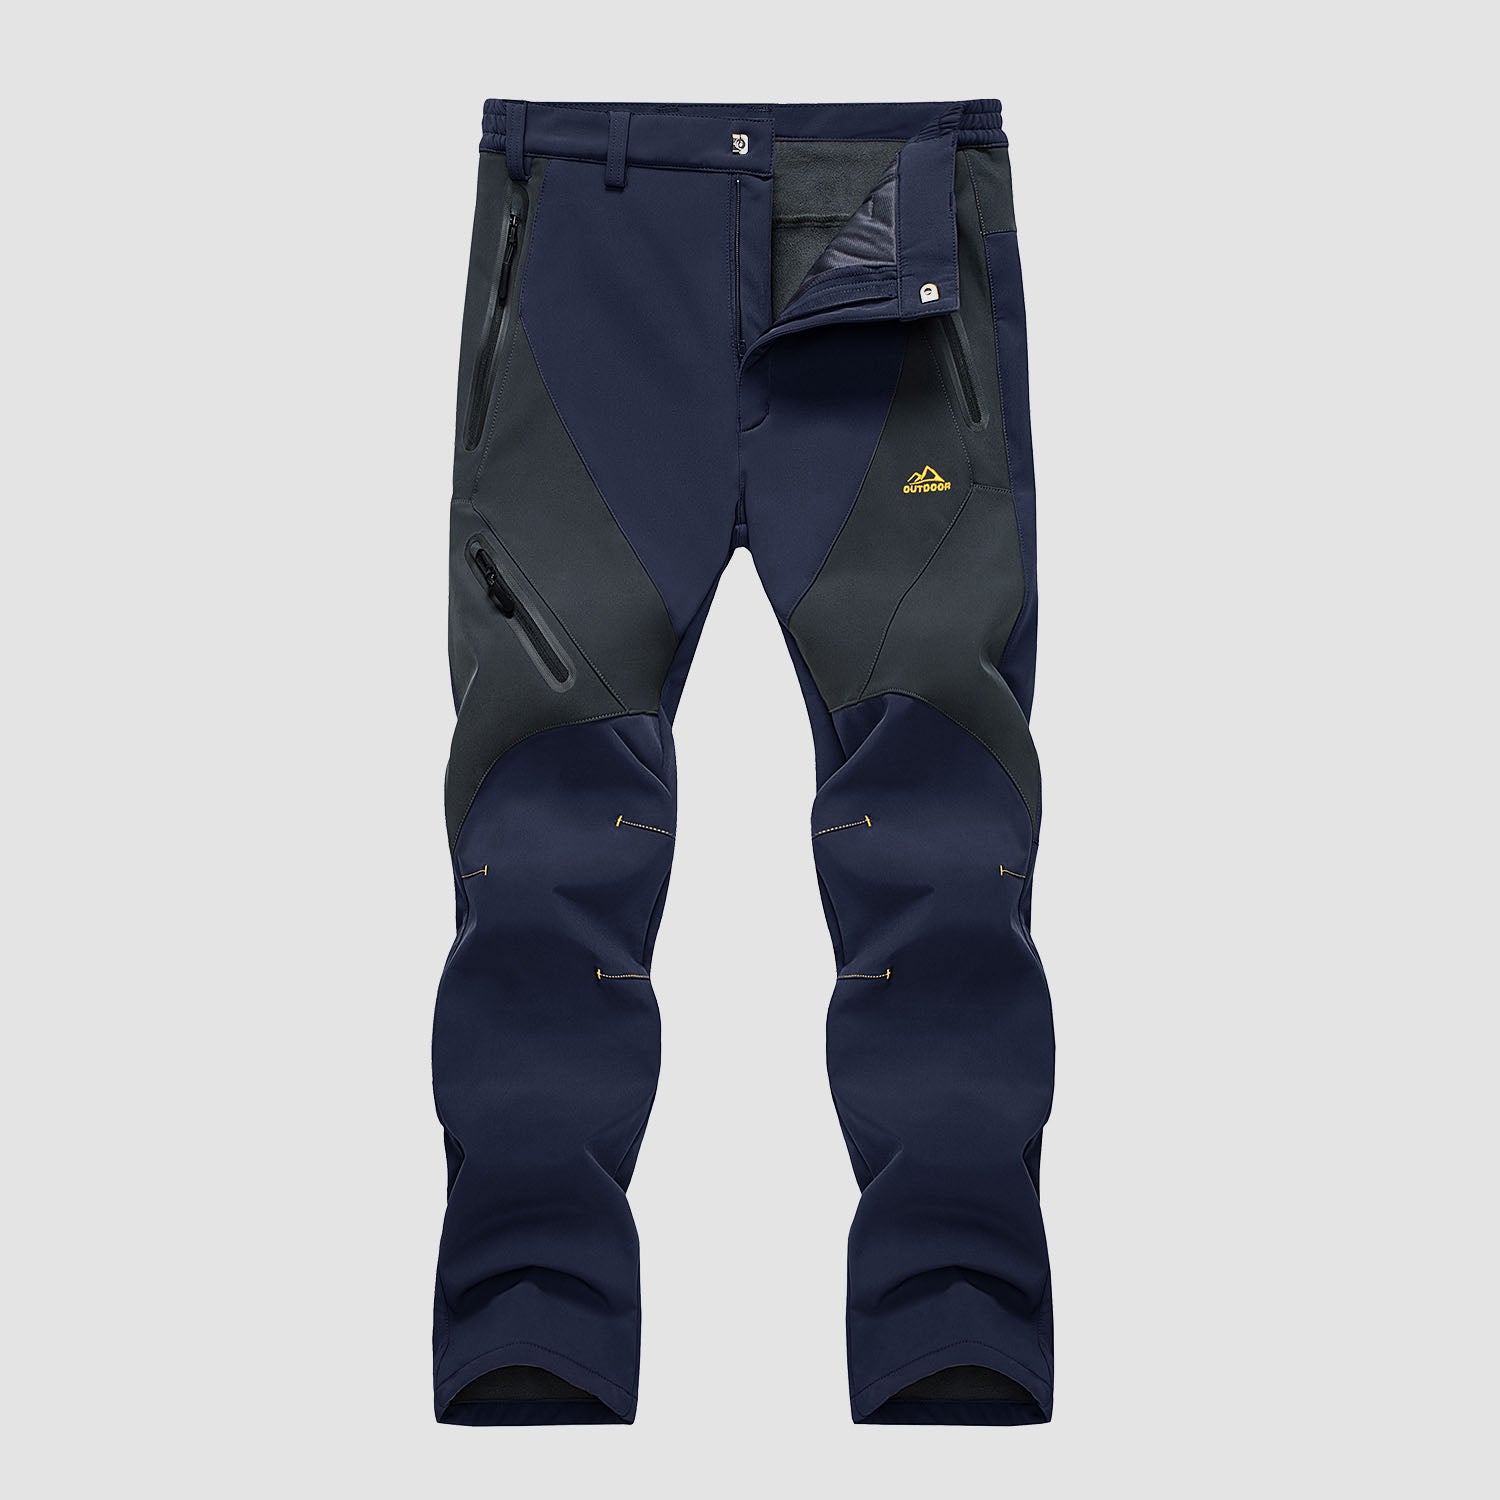 Men's Winter Pants Snow Pants Fleece Lined Water Resistant with 4 Zip Pockets Skiing Pants, Army Green / 40